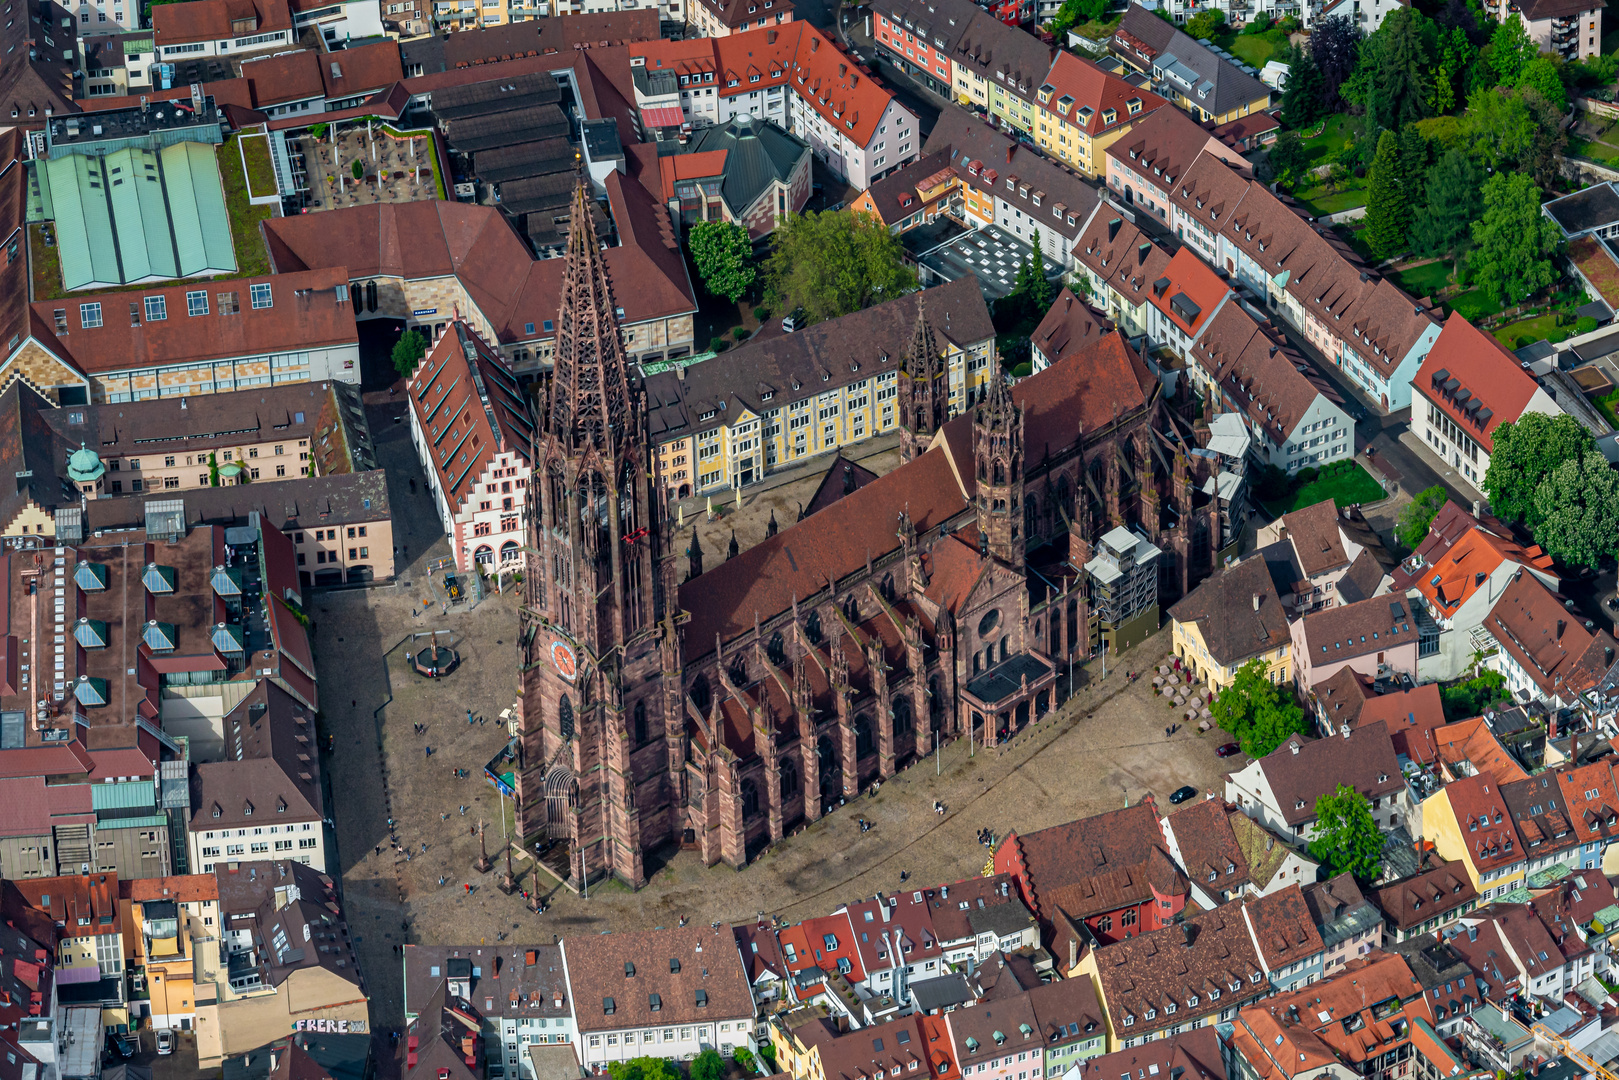 Freiburger Münster 2021